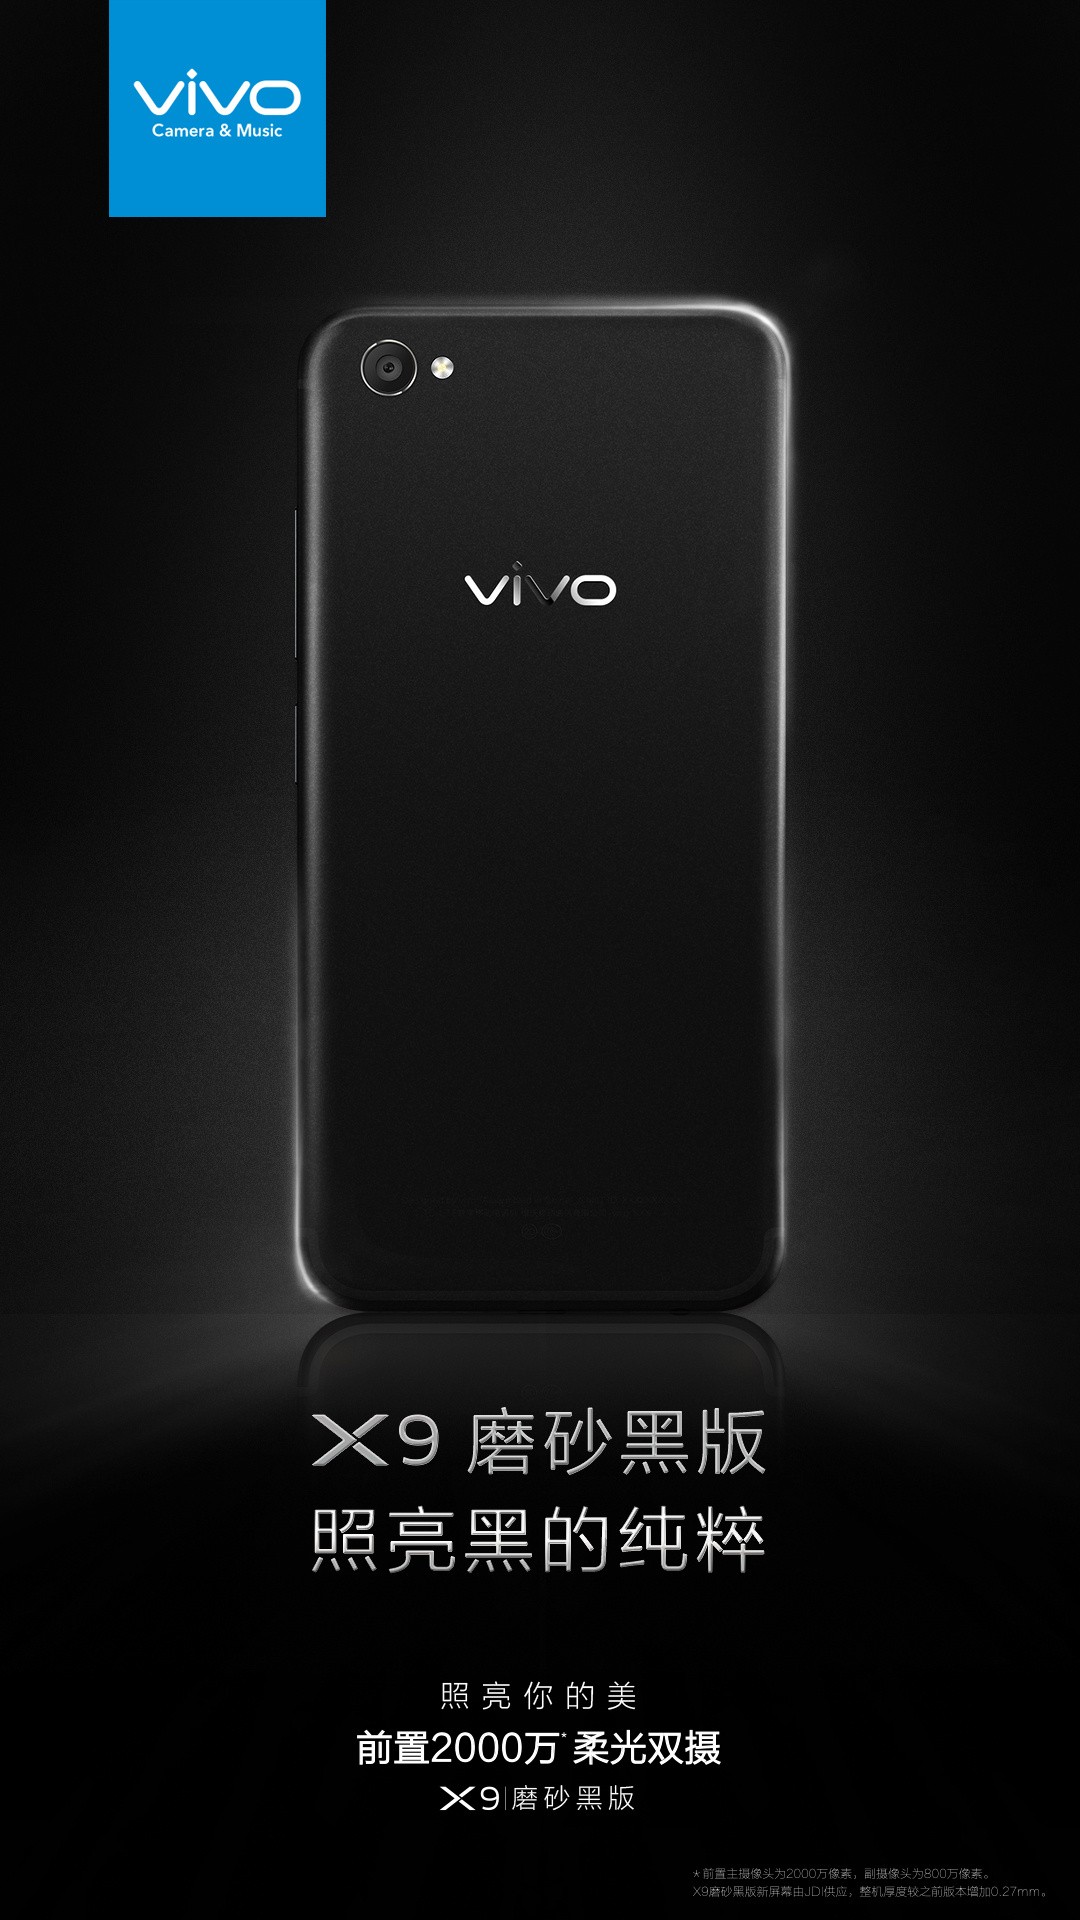 Vivo X9 color negro mate se lanza en China